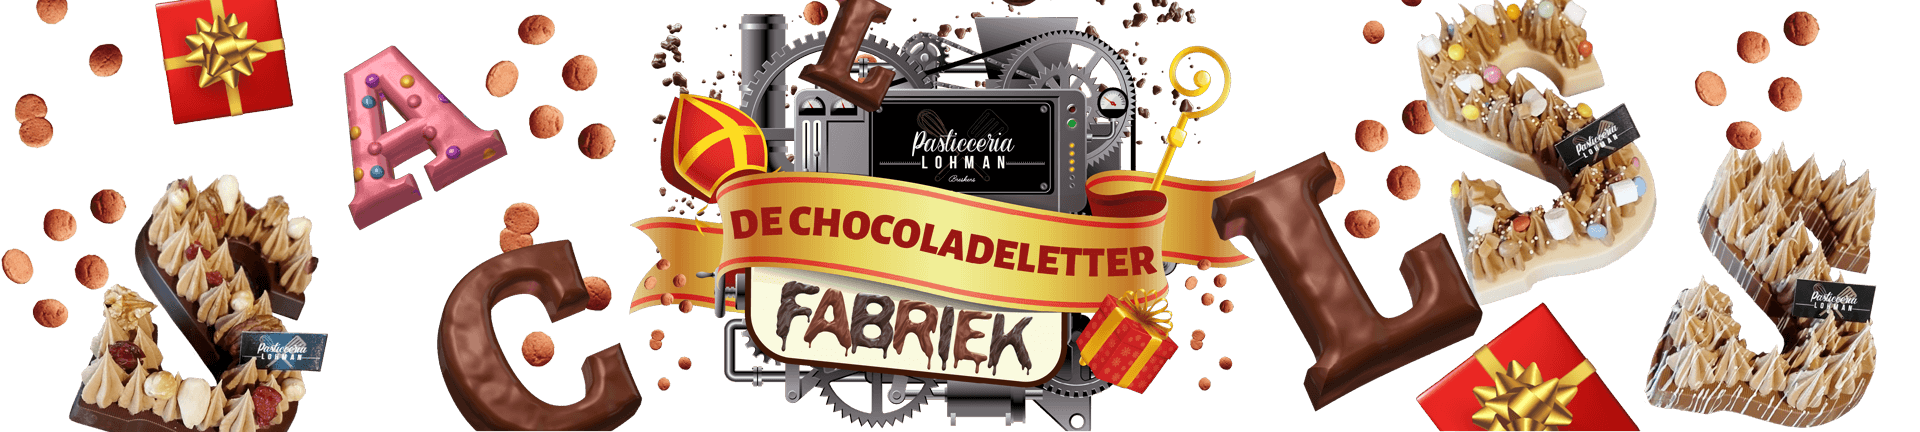 De Chocoladeletter Fabriek